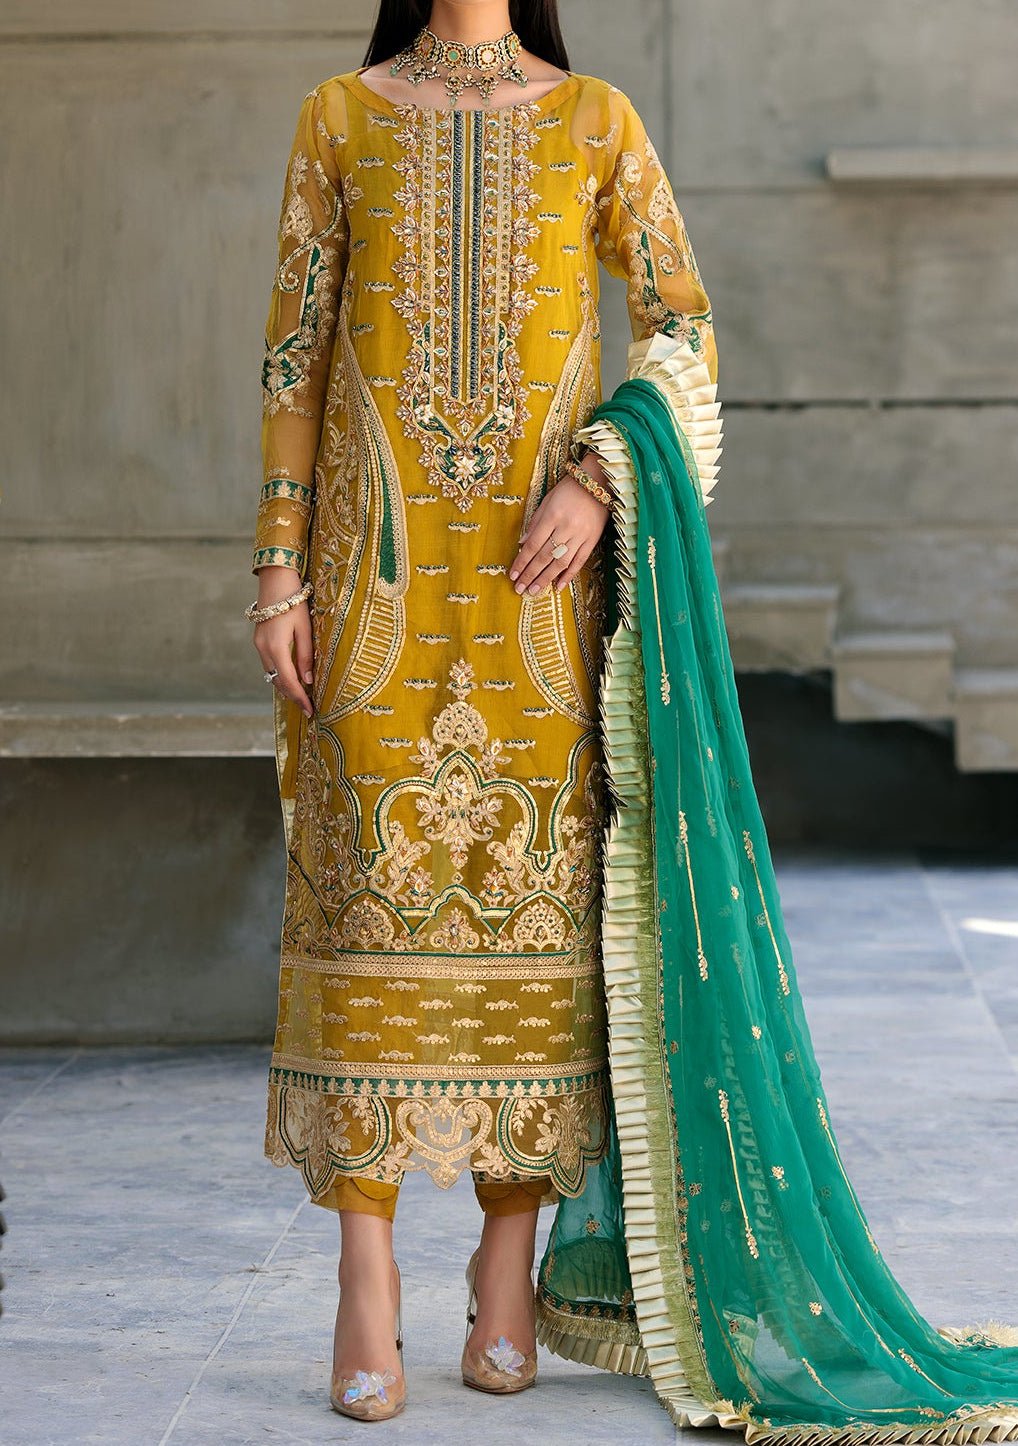 Emaan Adeel Belle Robe Luxury Pakistani Dress - db18373